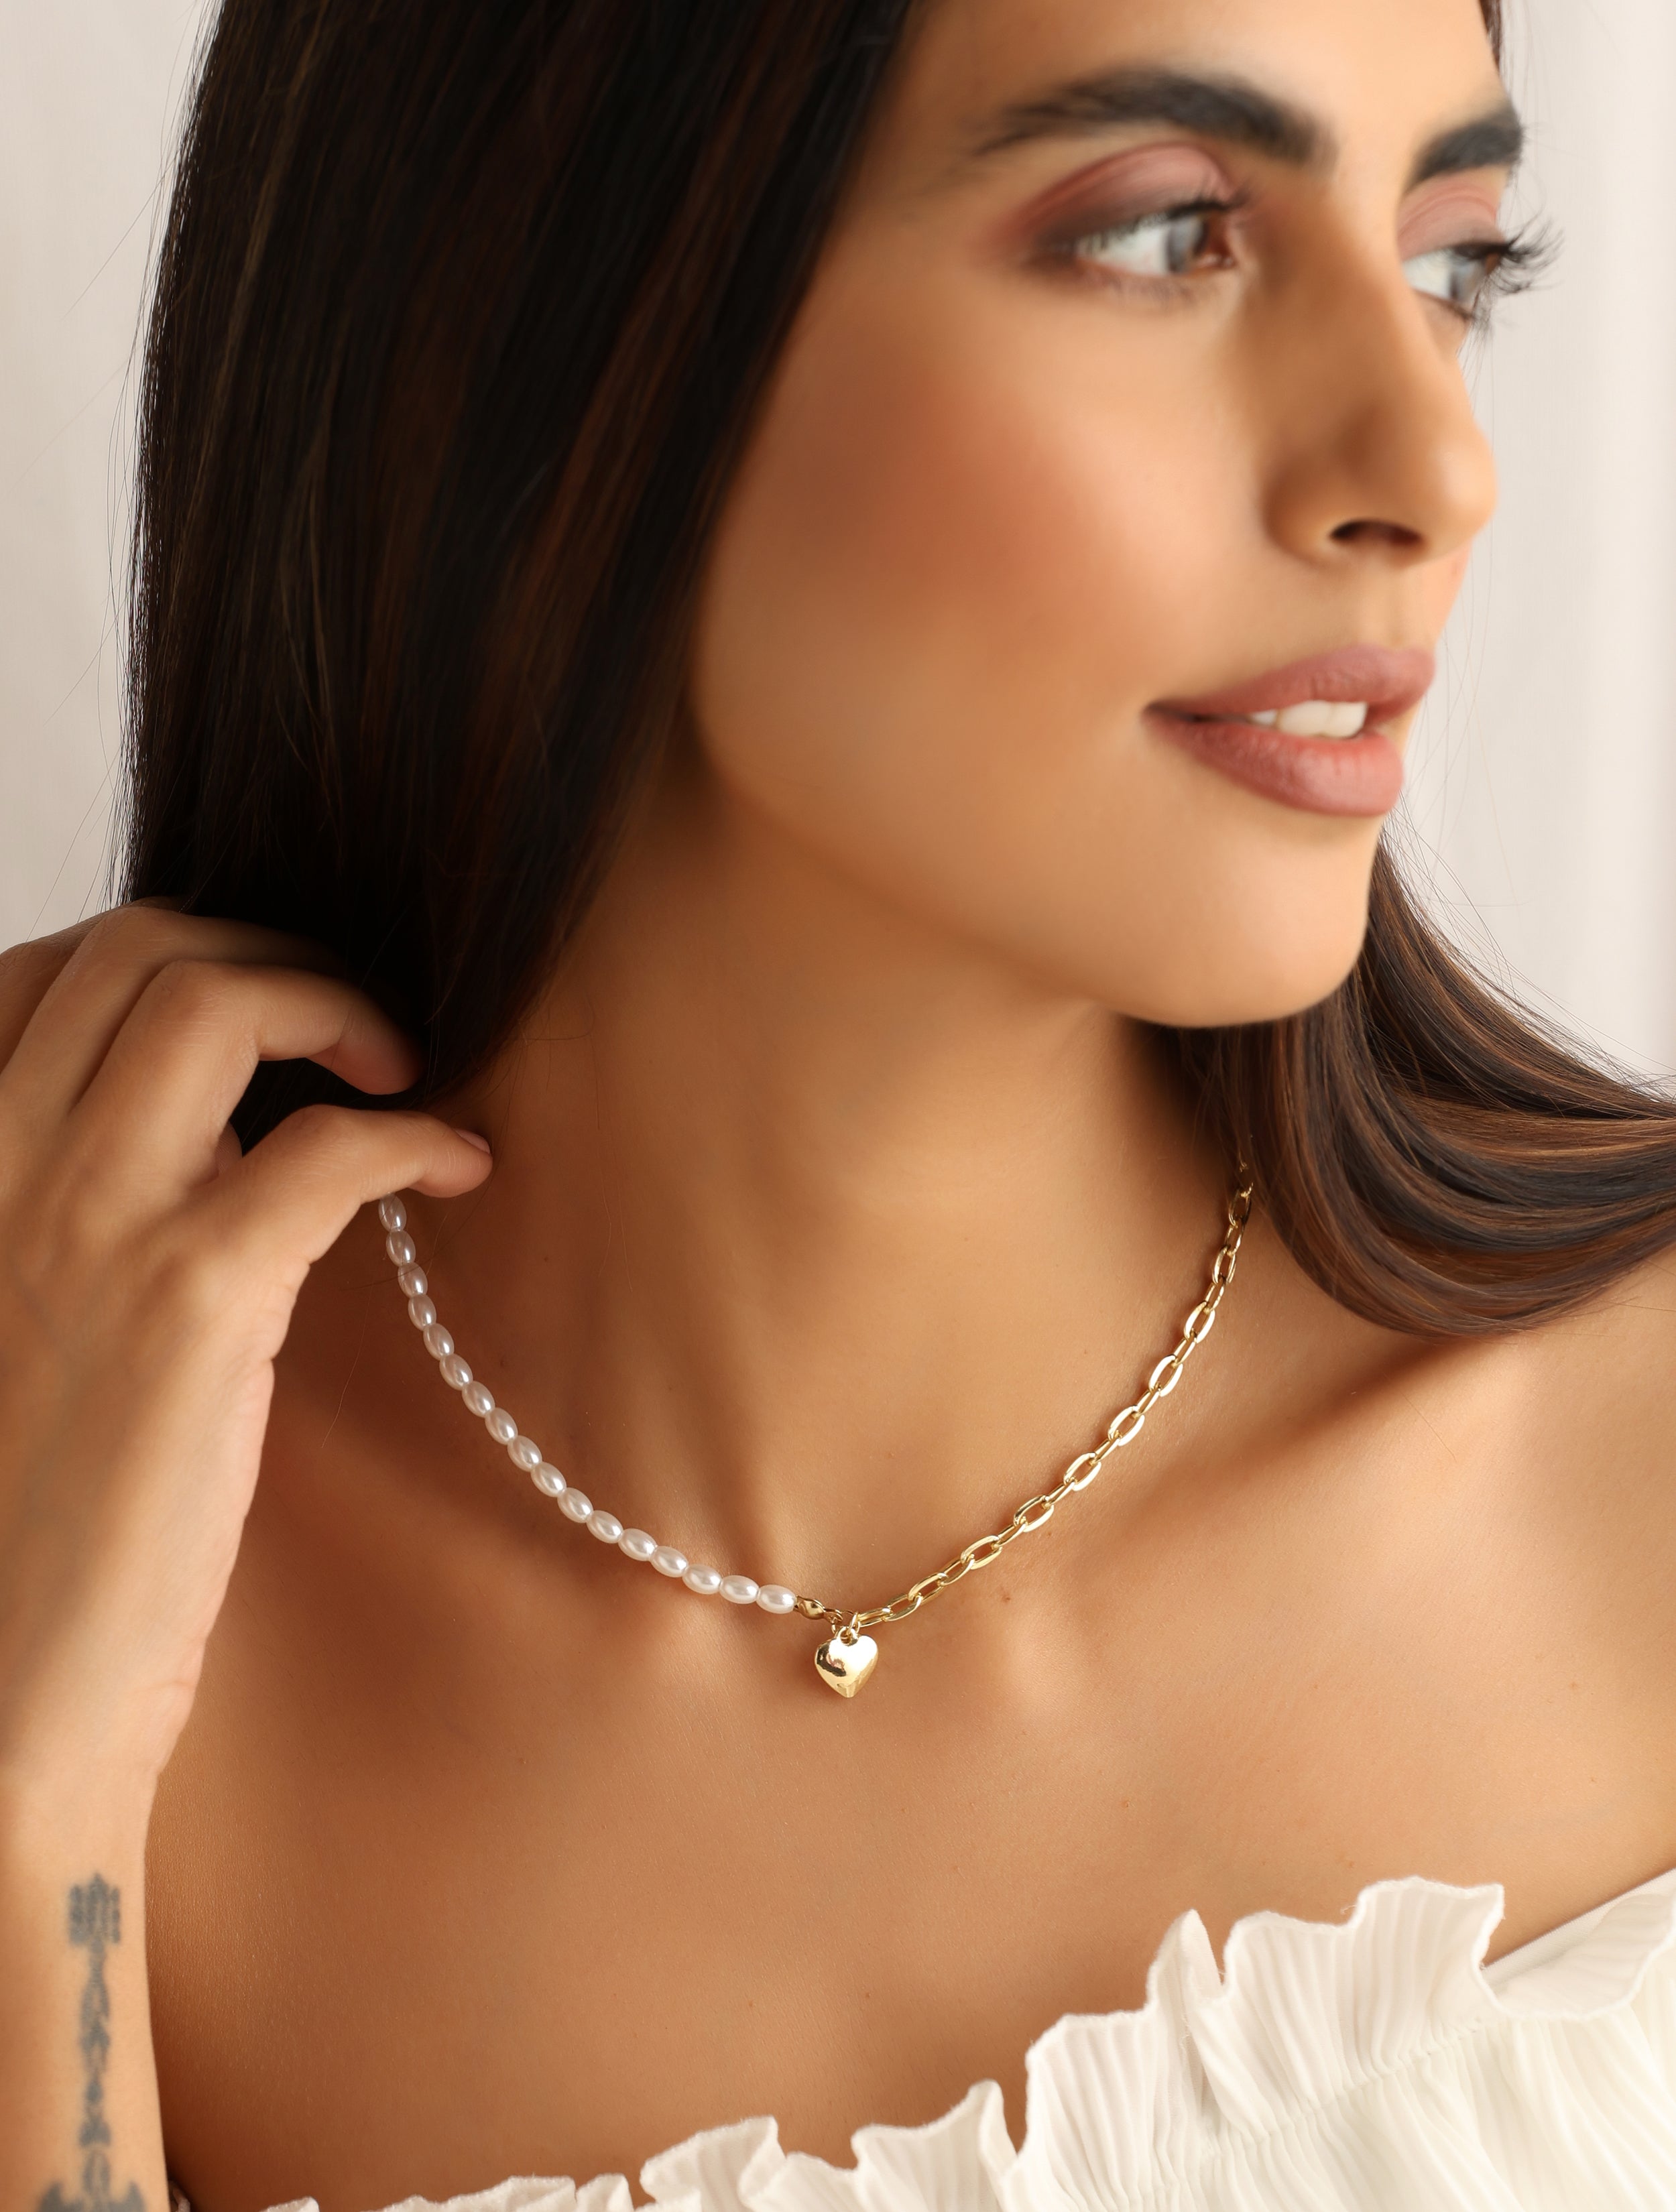 Elegant Pearl Heart Necklace